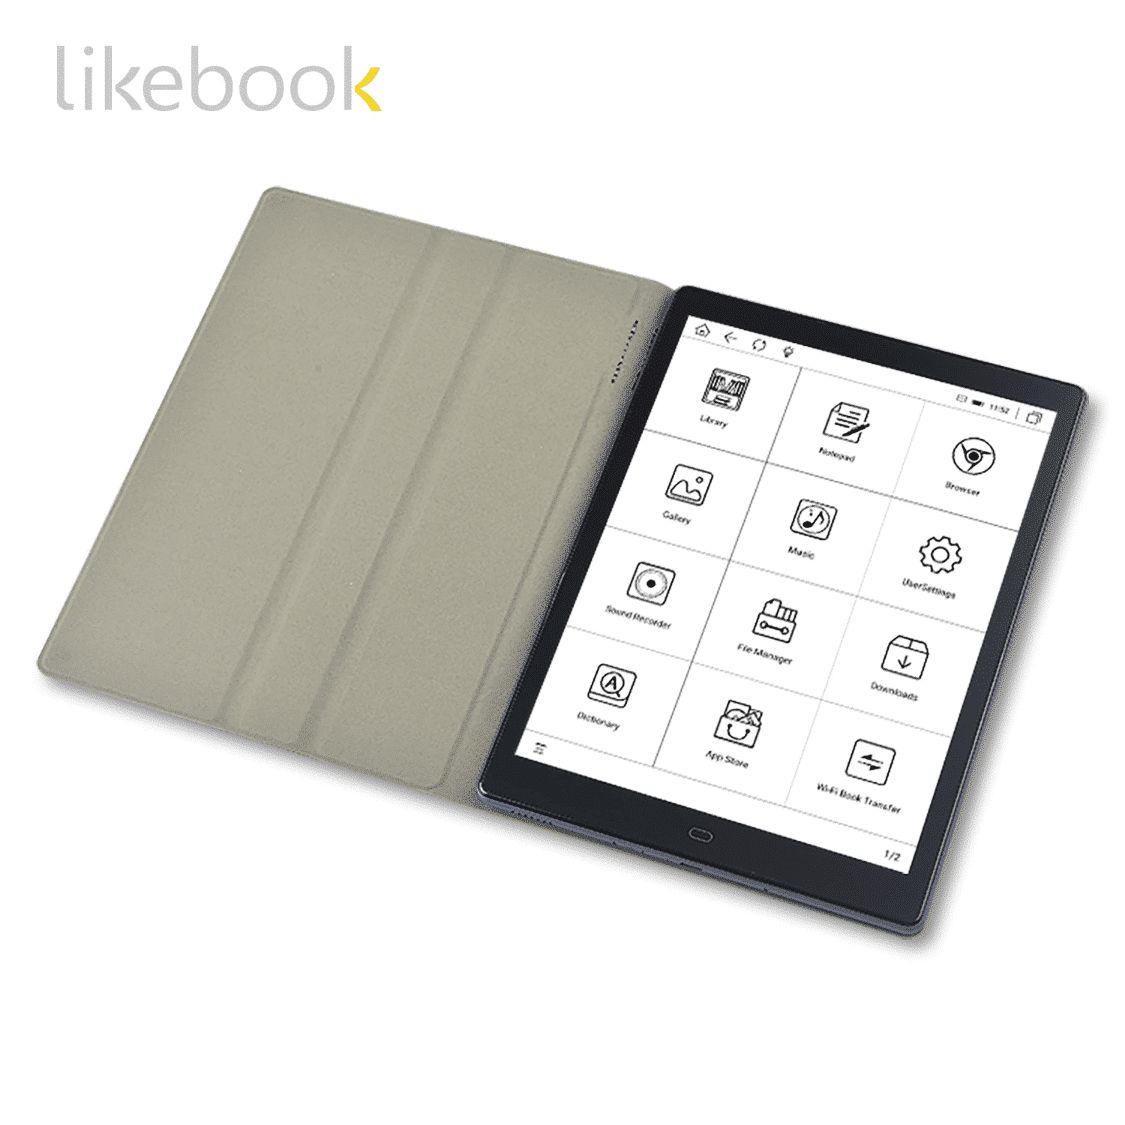 Boyue Likebook P10 - 10 inch e-reader - 4